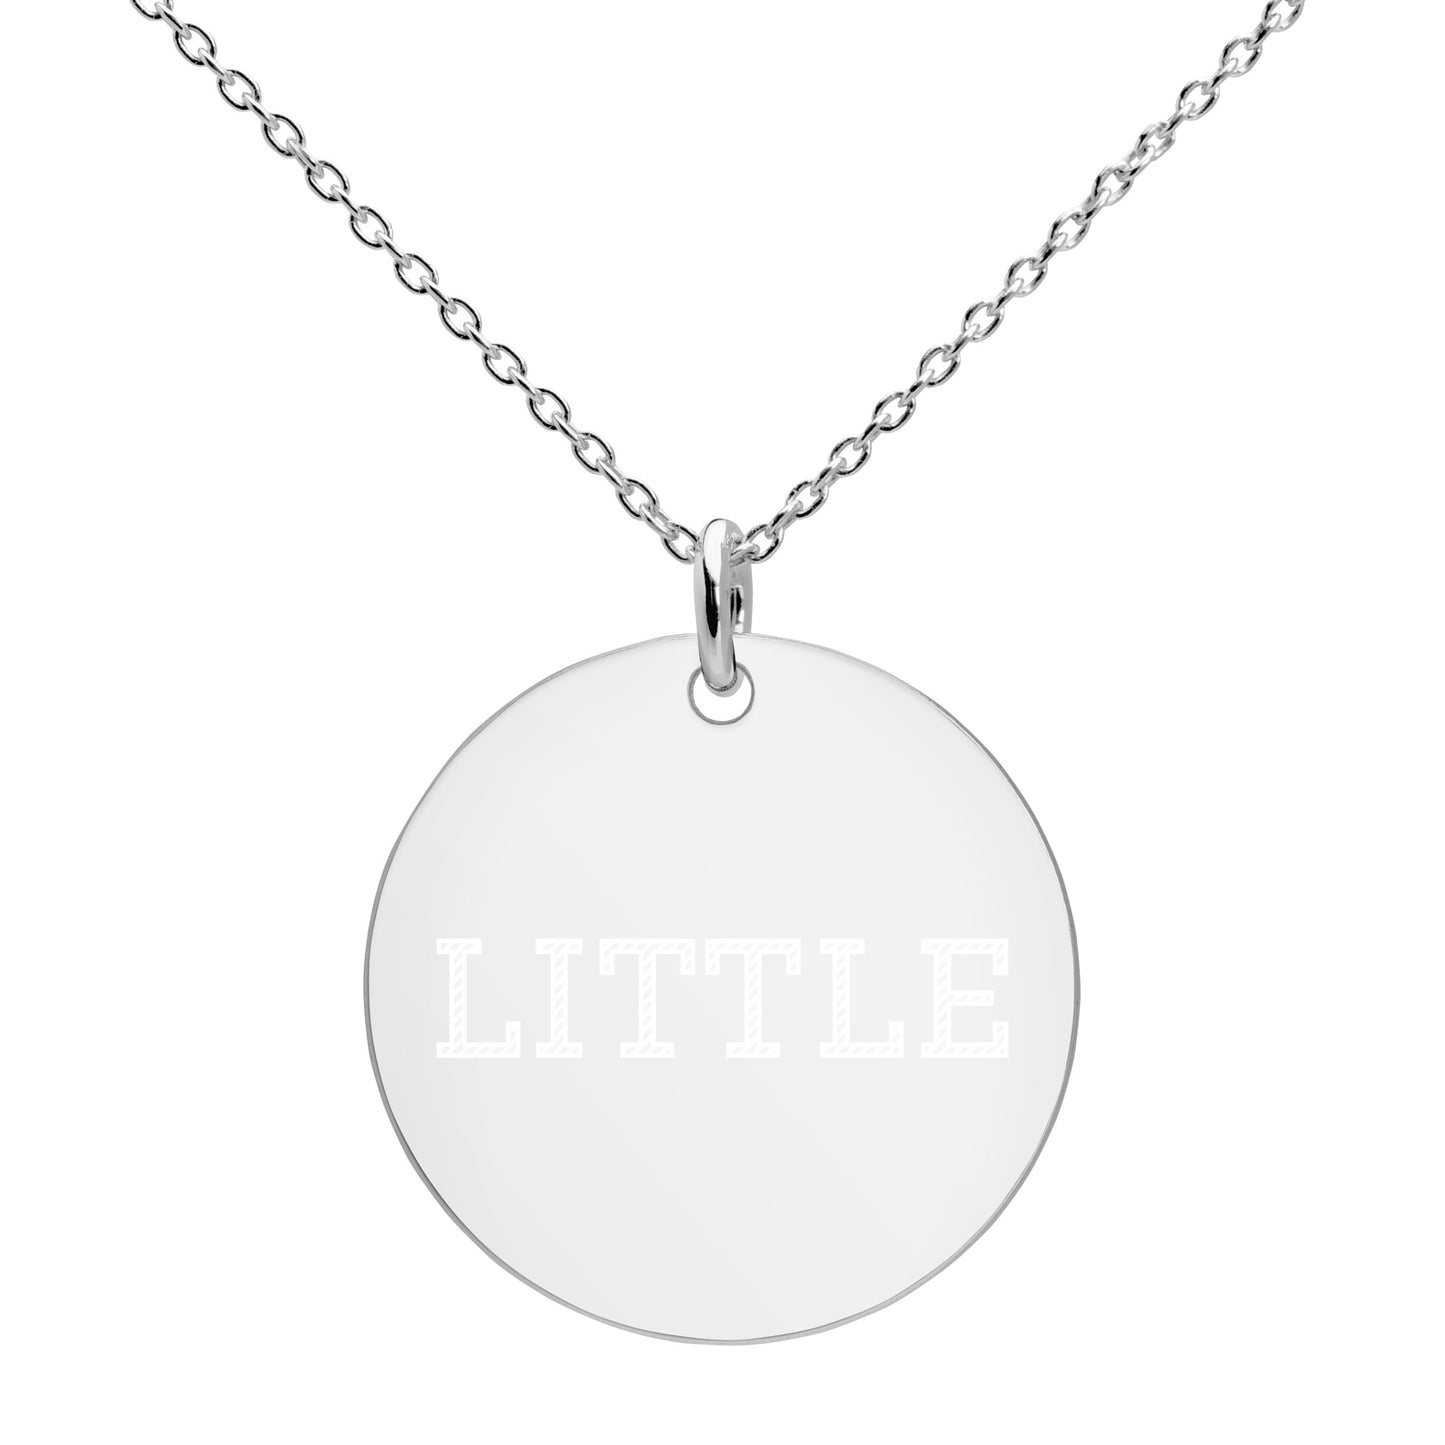 ABDL 'Little' Engraved Silver Disc Necklace